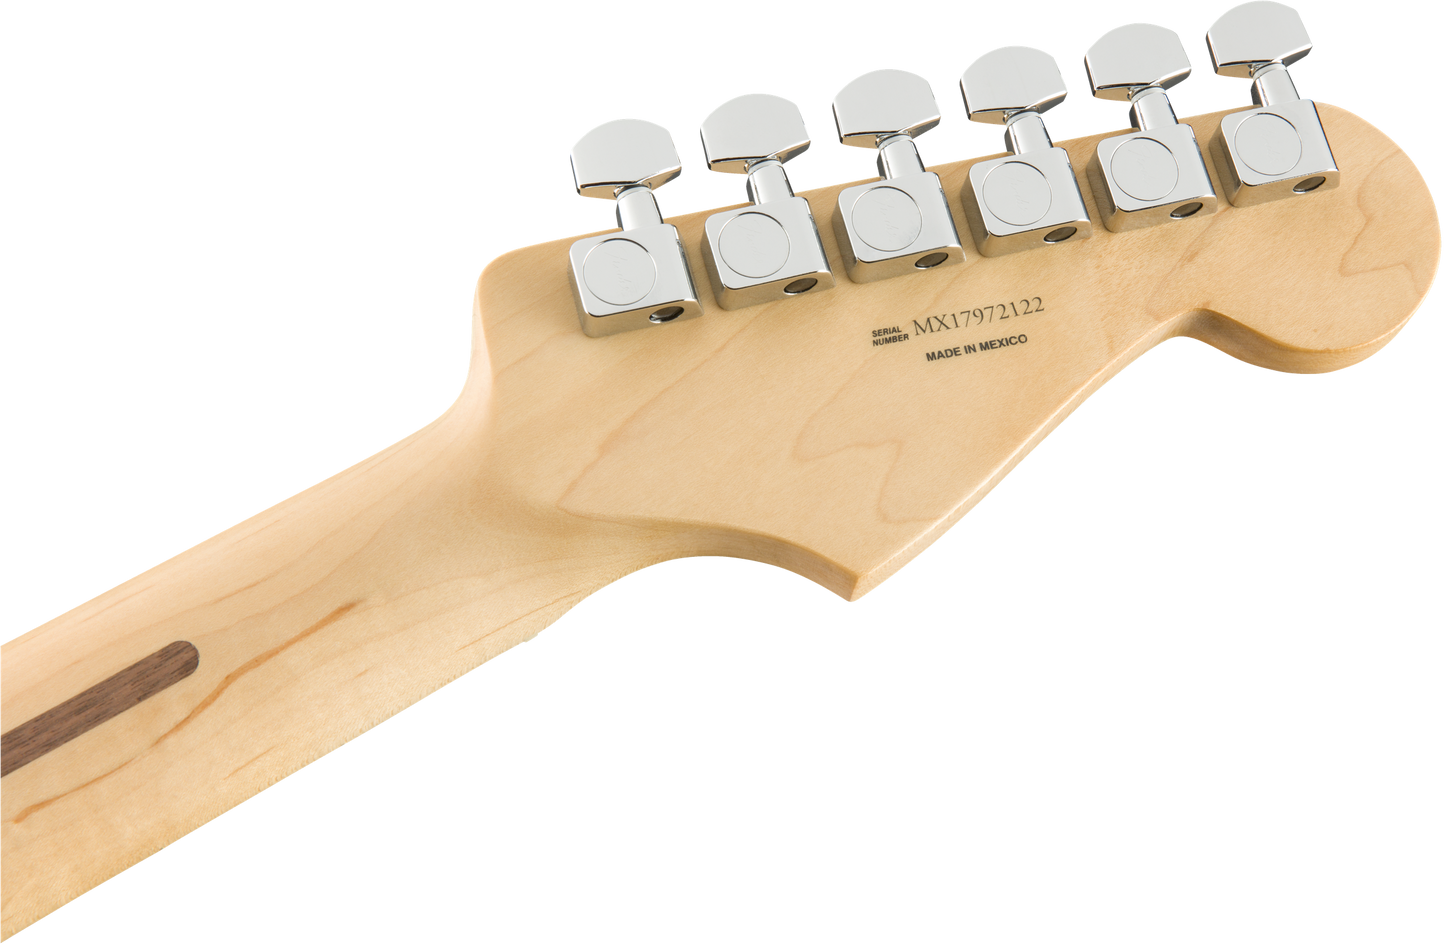 Fender Player Stratocaster Left-Handed - Tidepool